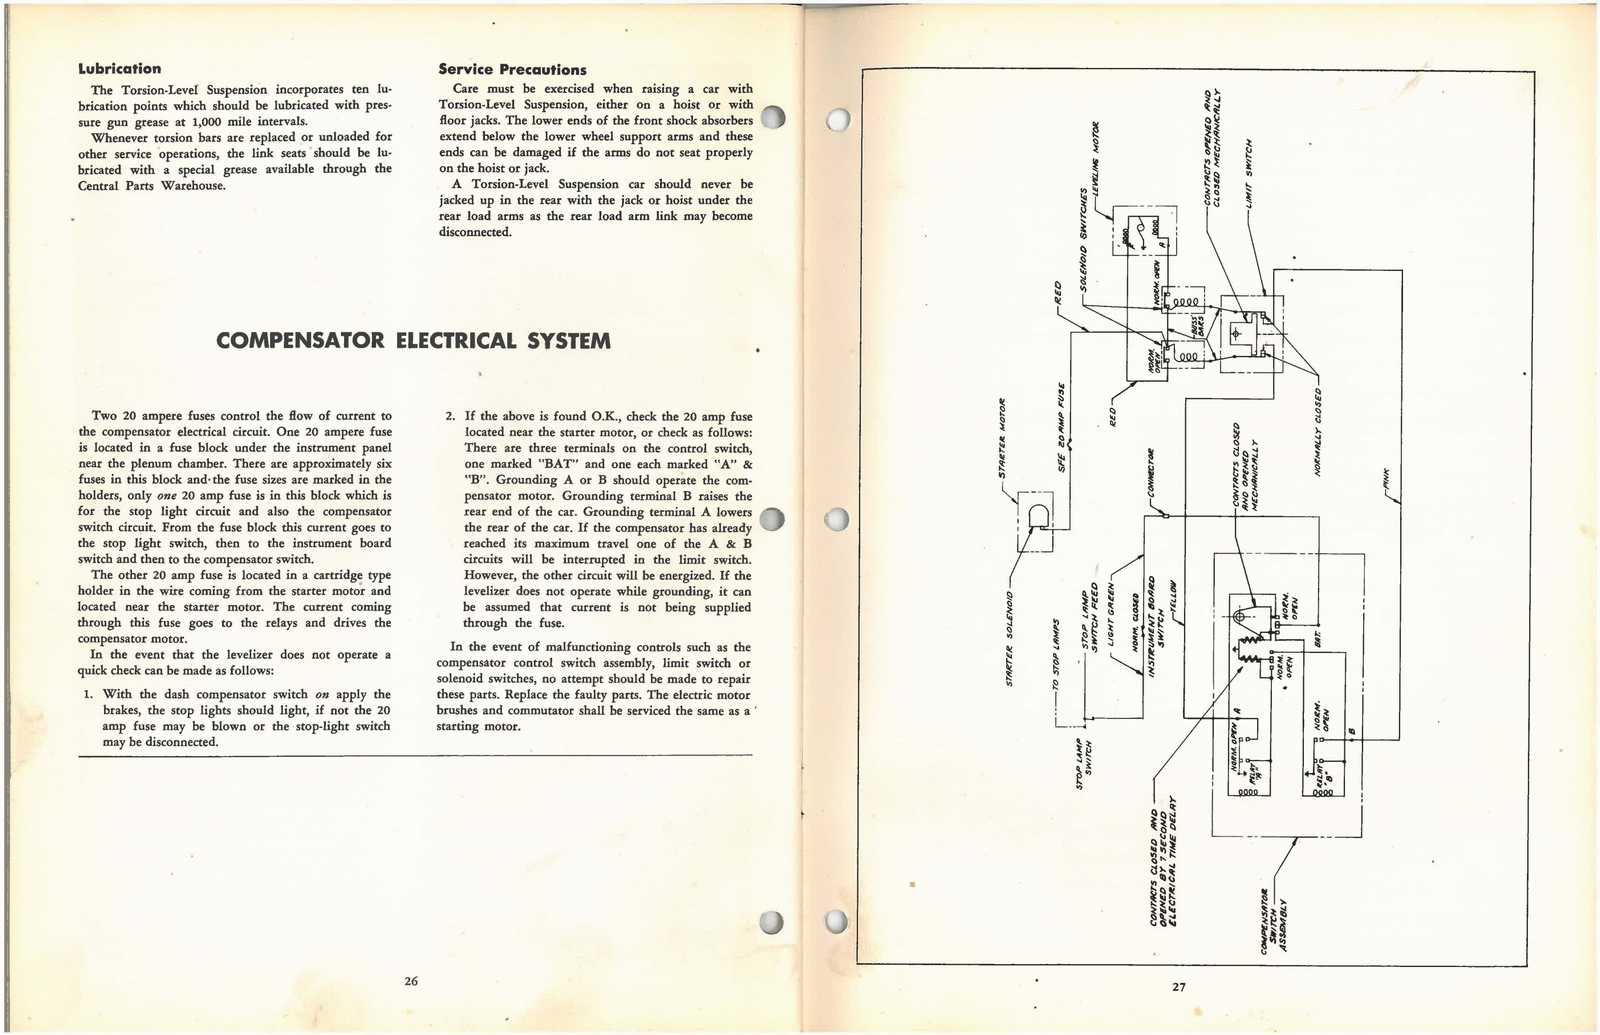 n_1955 Packard Sevicemens Training Book-26-27.jpg